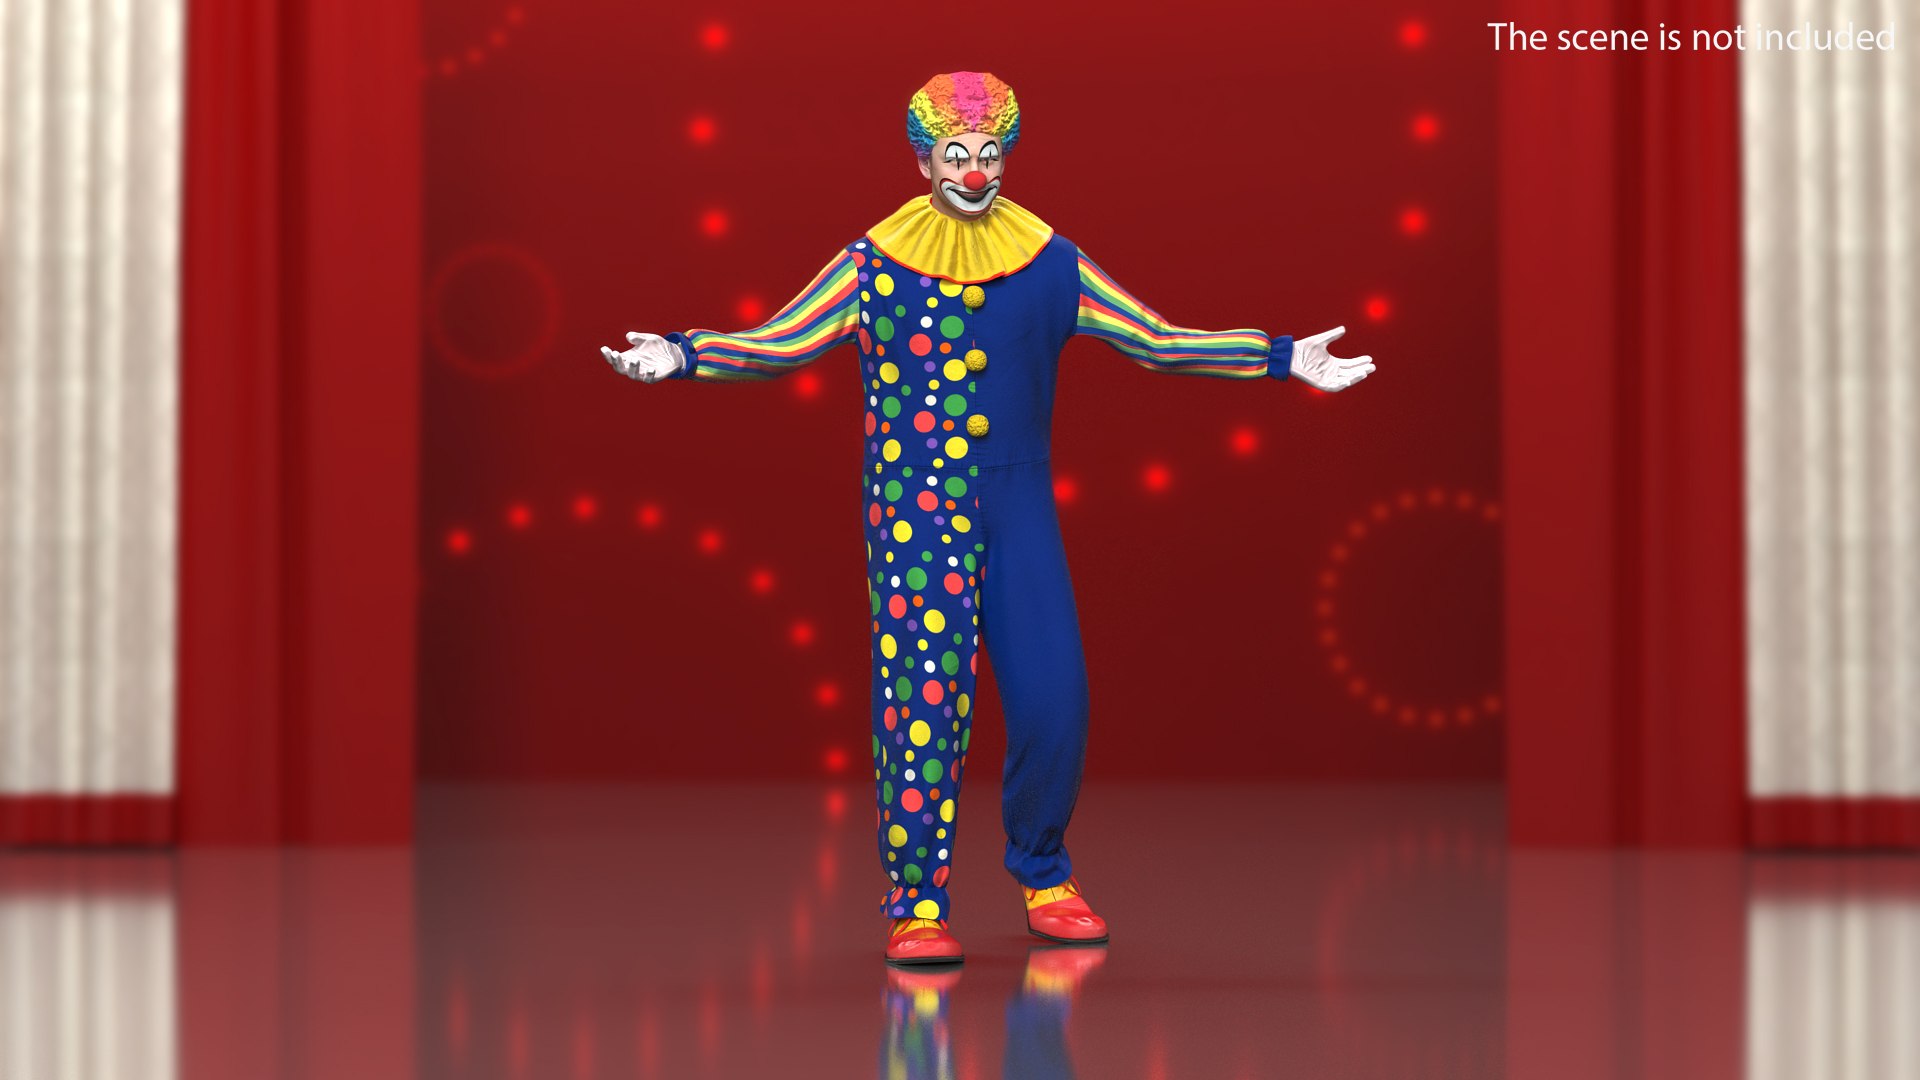 Funny Clown Costume Rigged 3D Model - TurboSquid 1597407